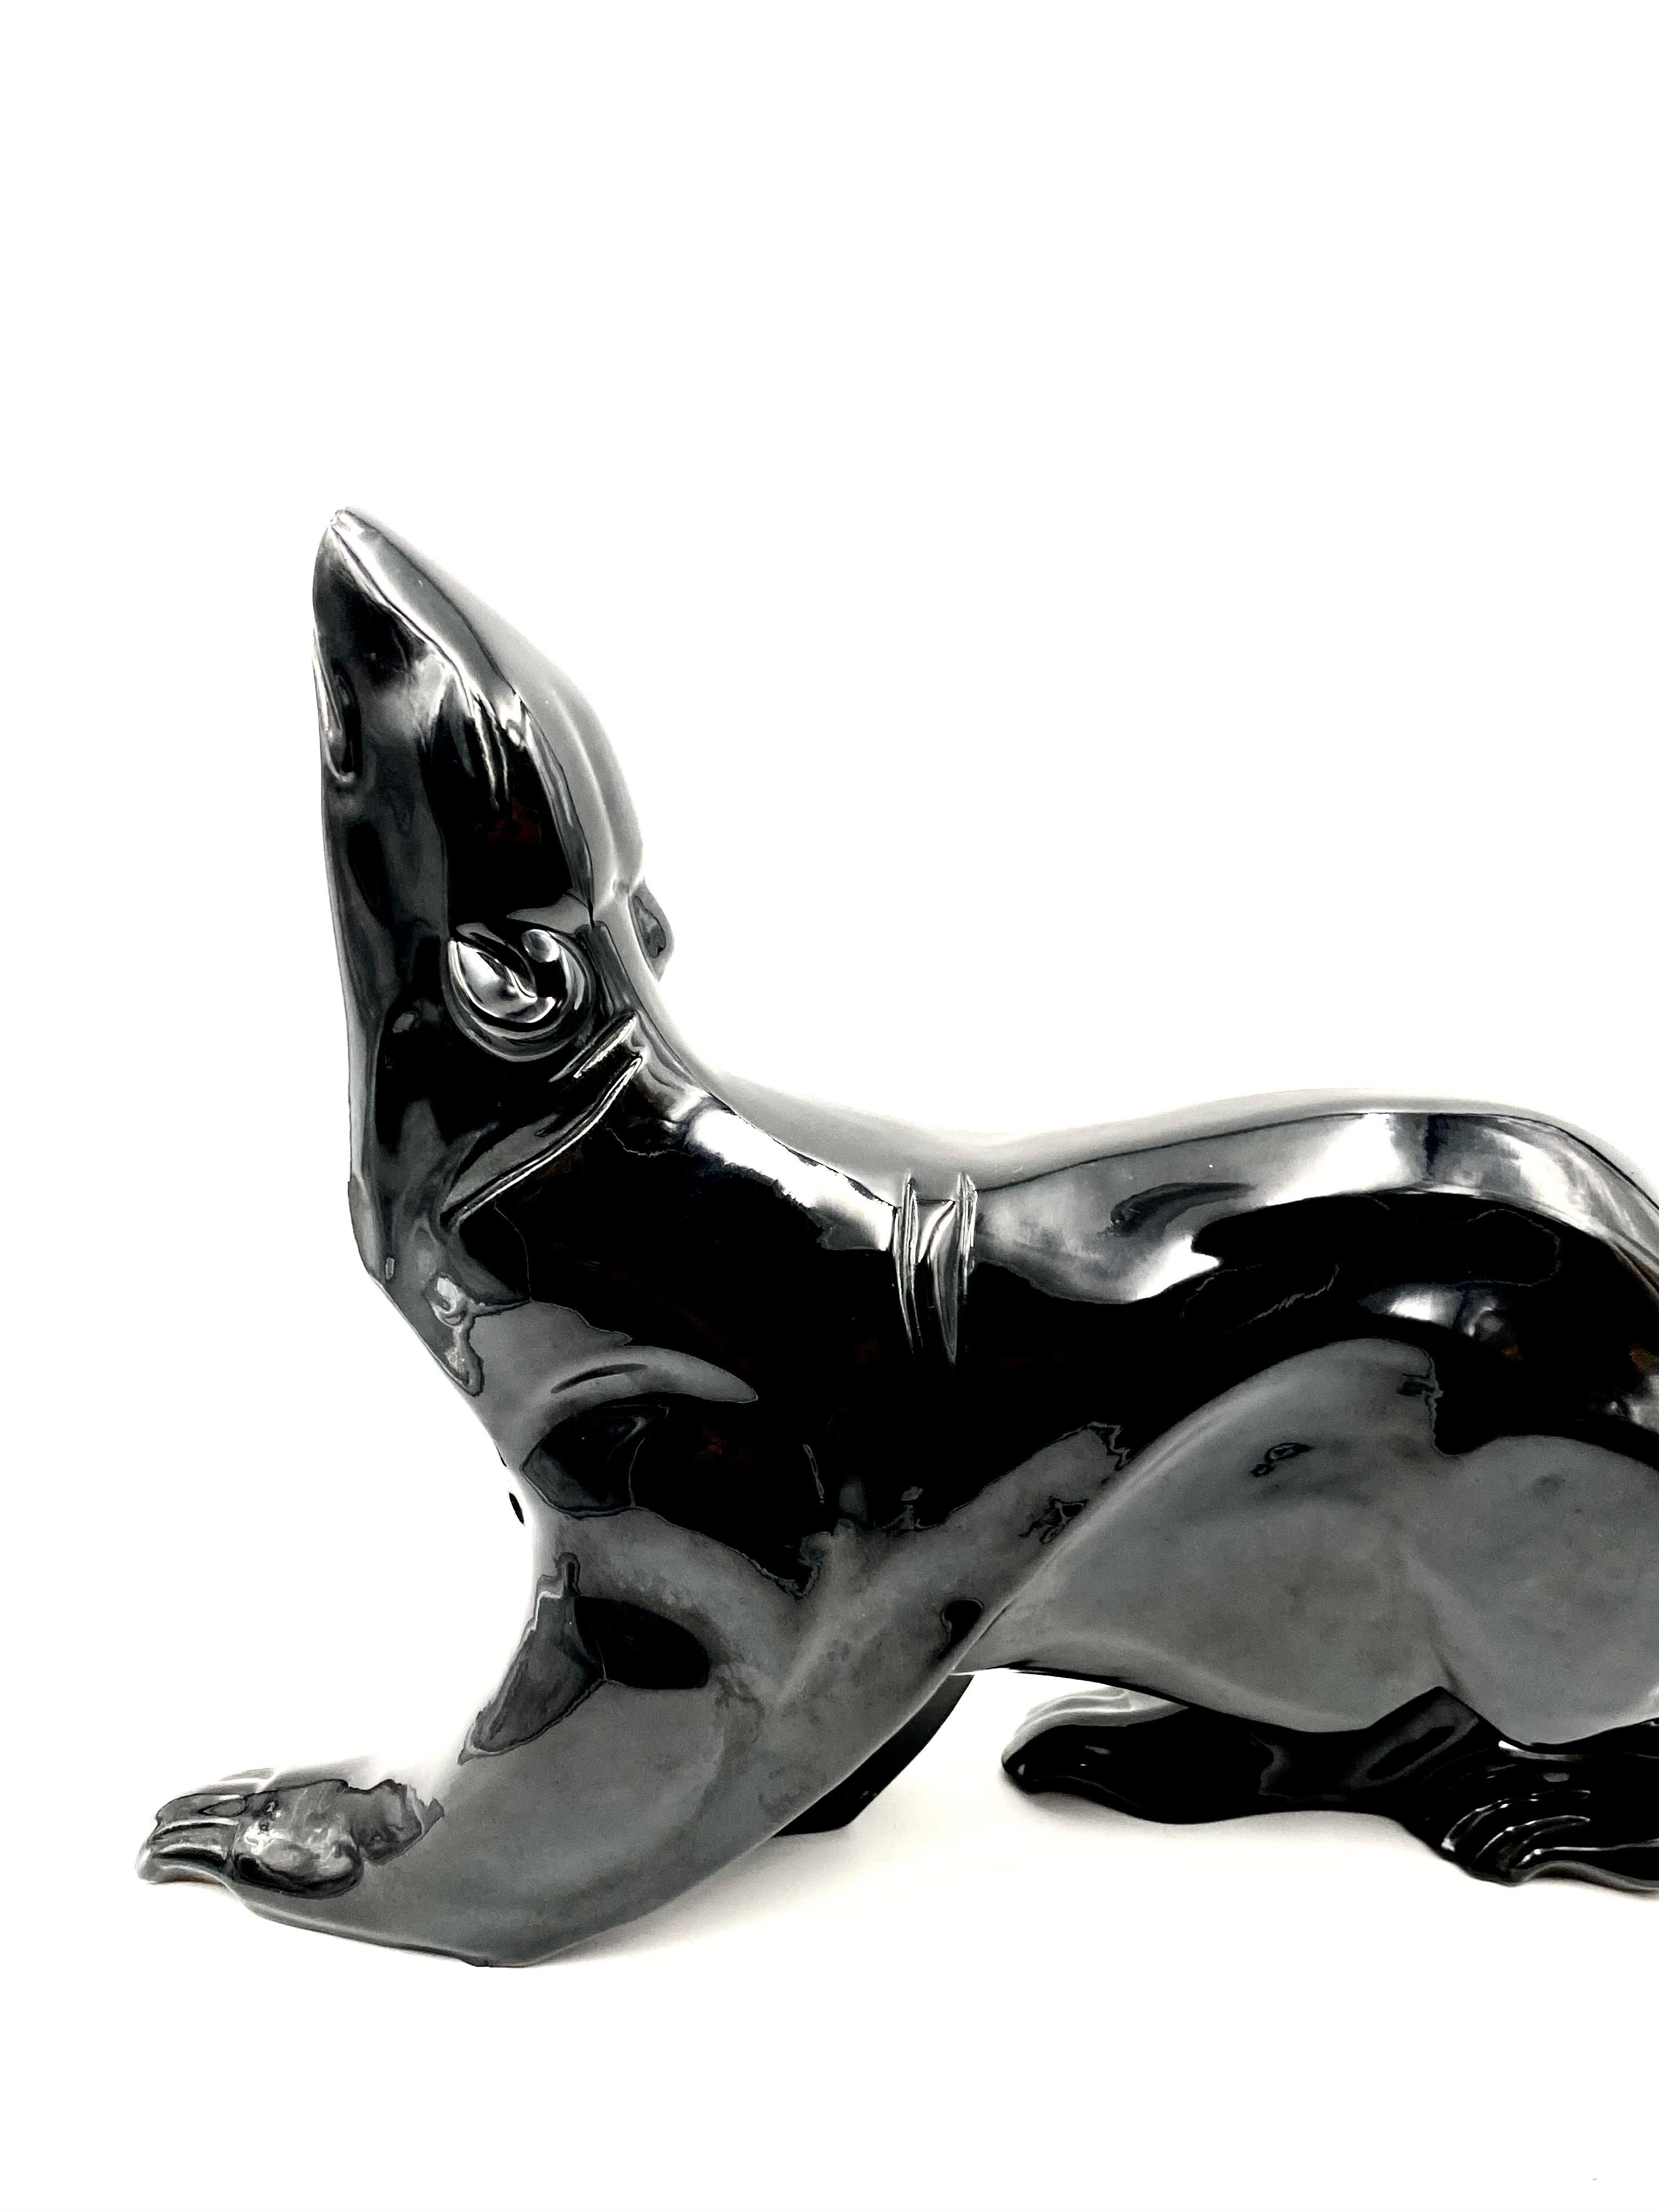 Early 20th Century Desbarbieux, Black Polar Bear Ceramic Sculpture, Saint-Clément France circa 1920